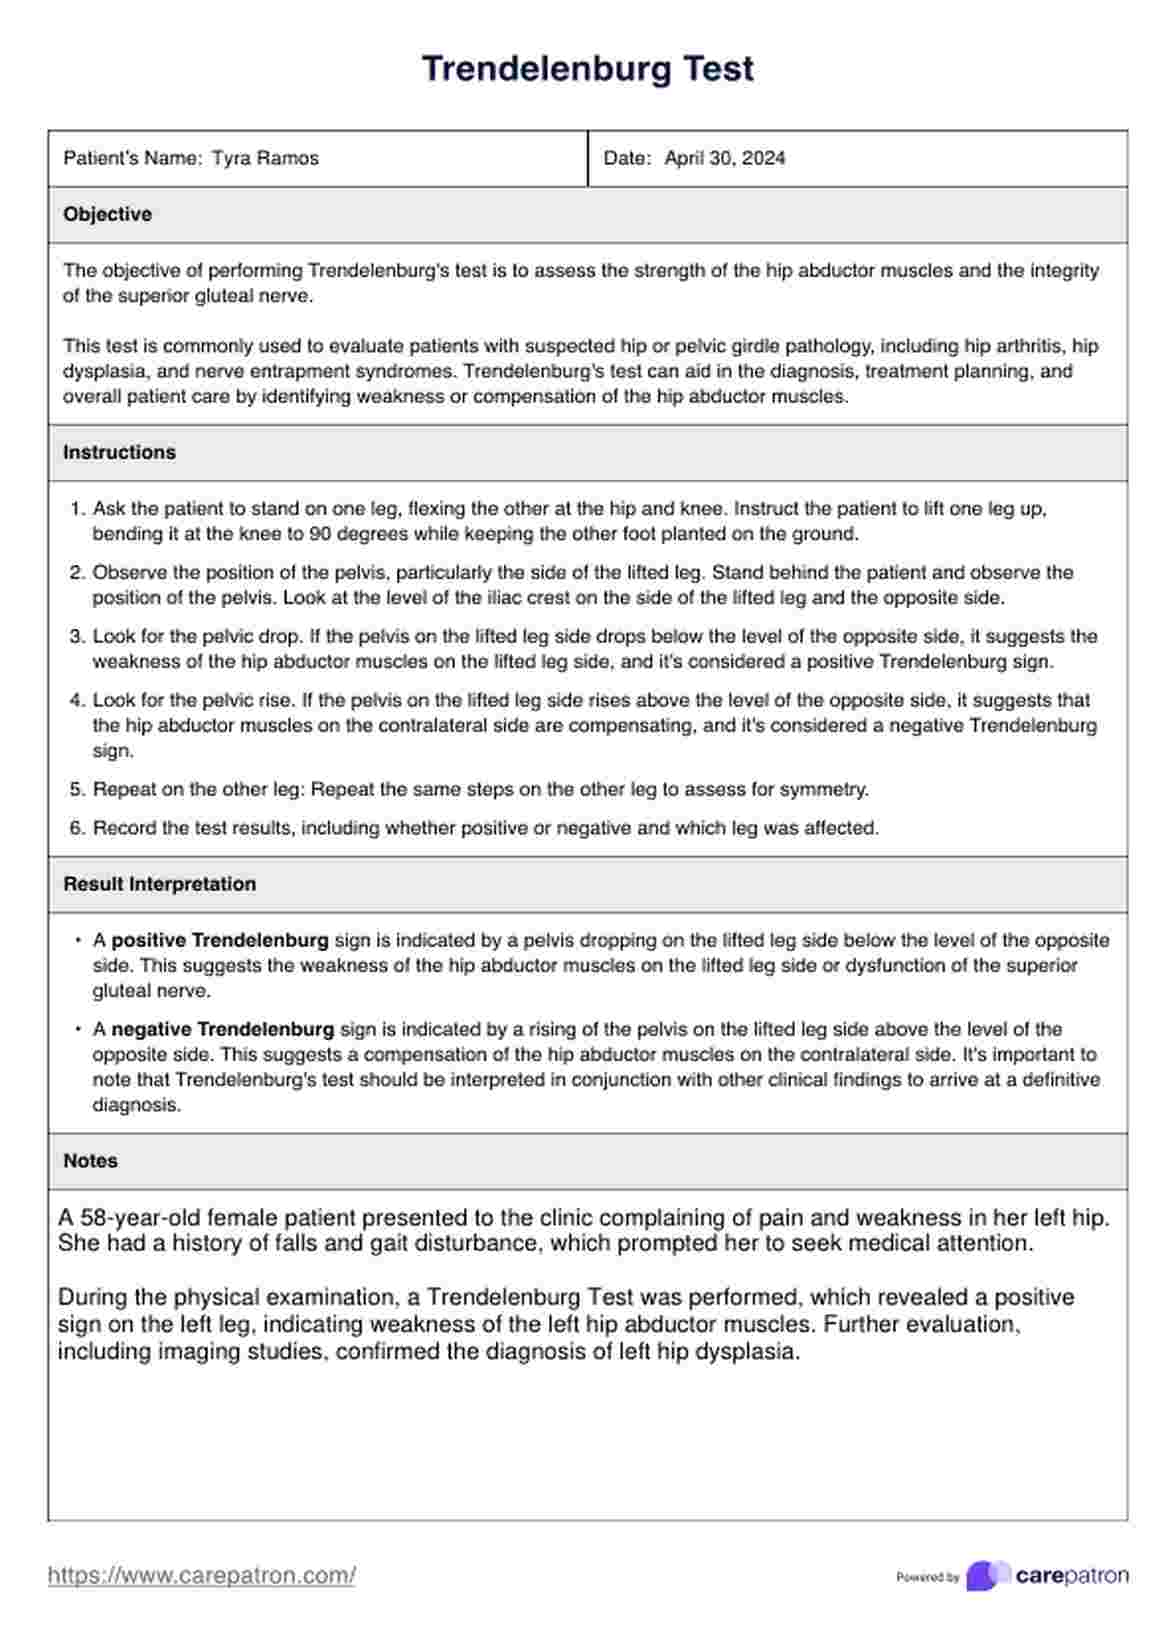 Trendelenburg Test PDF Example